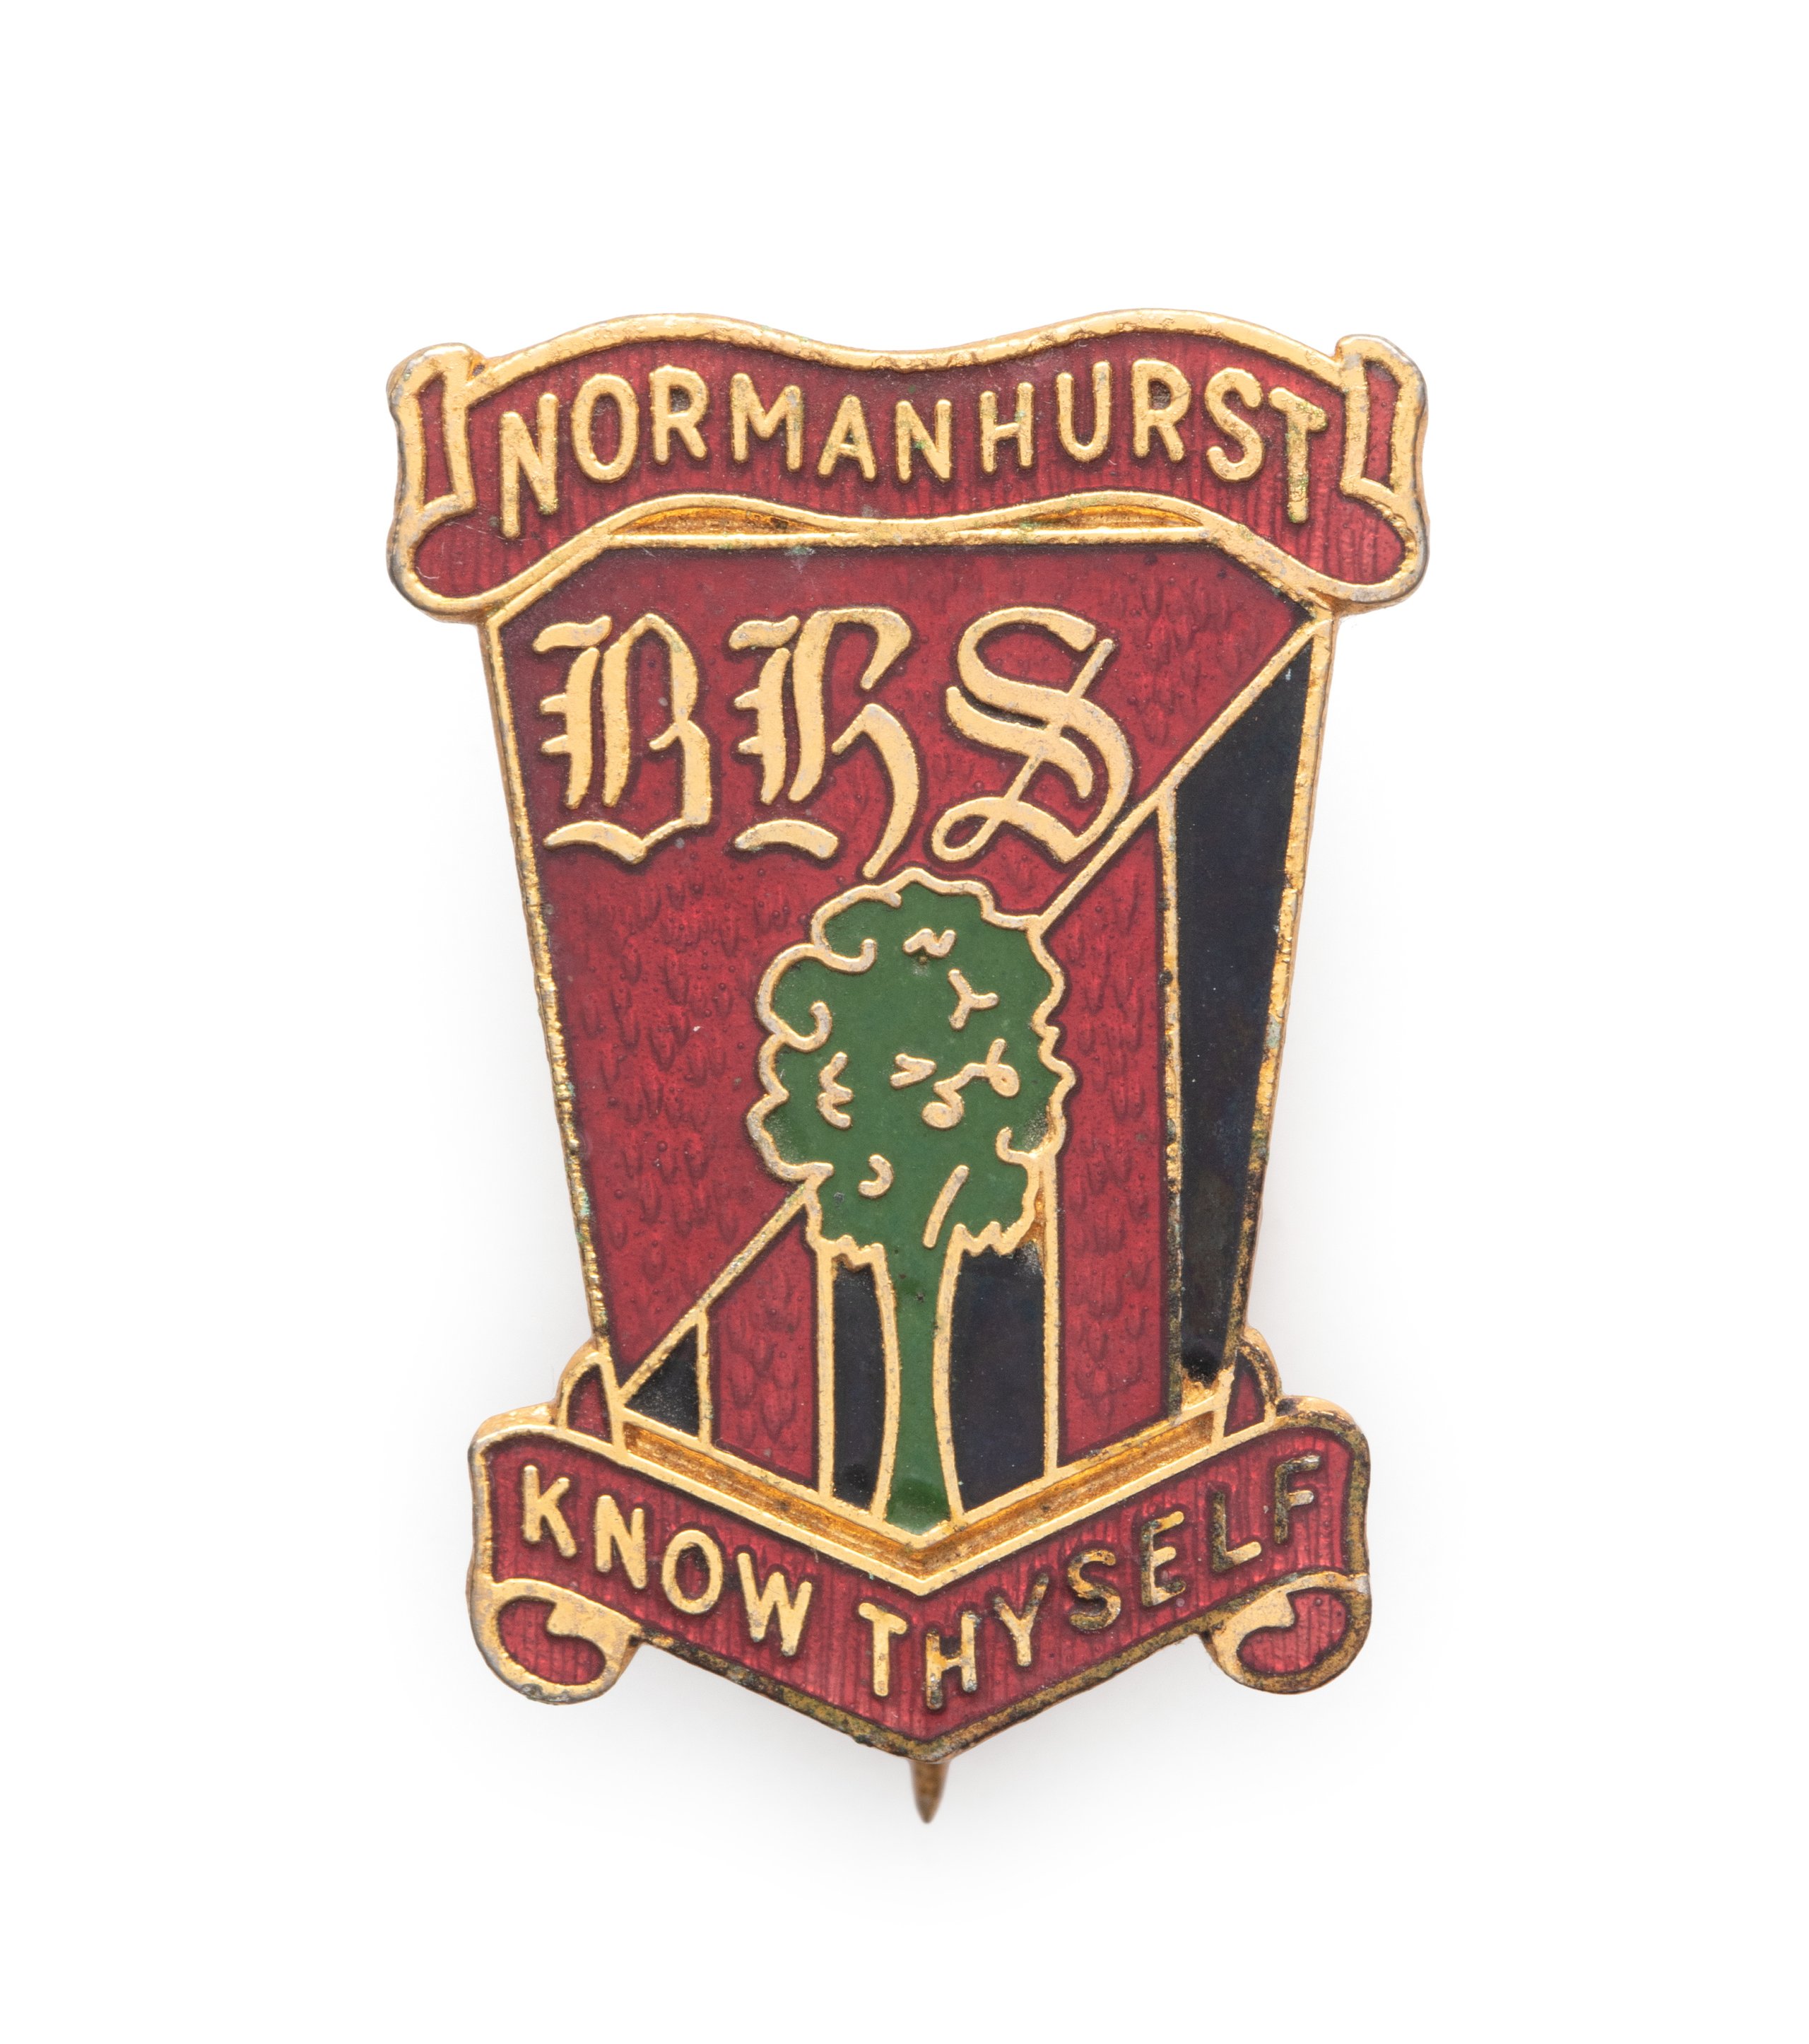 'Know Thyself' school badge